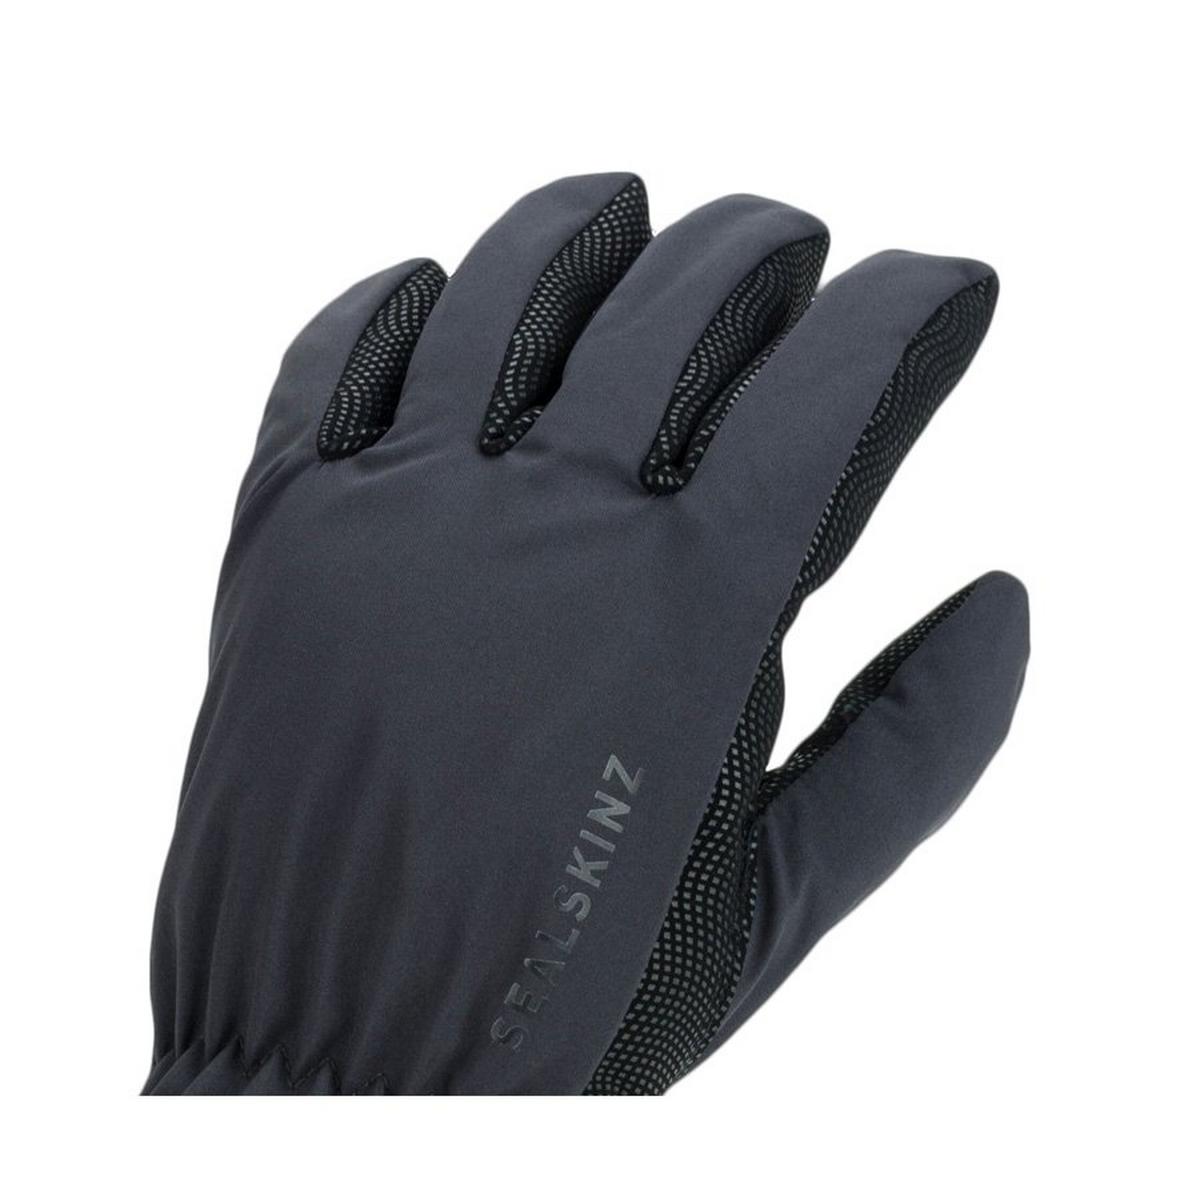 Sealskinz Waterproof All Weather Lightweight Glove - Black